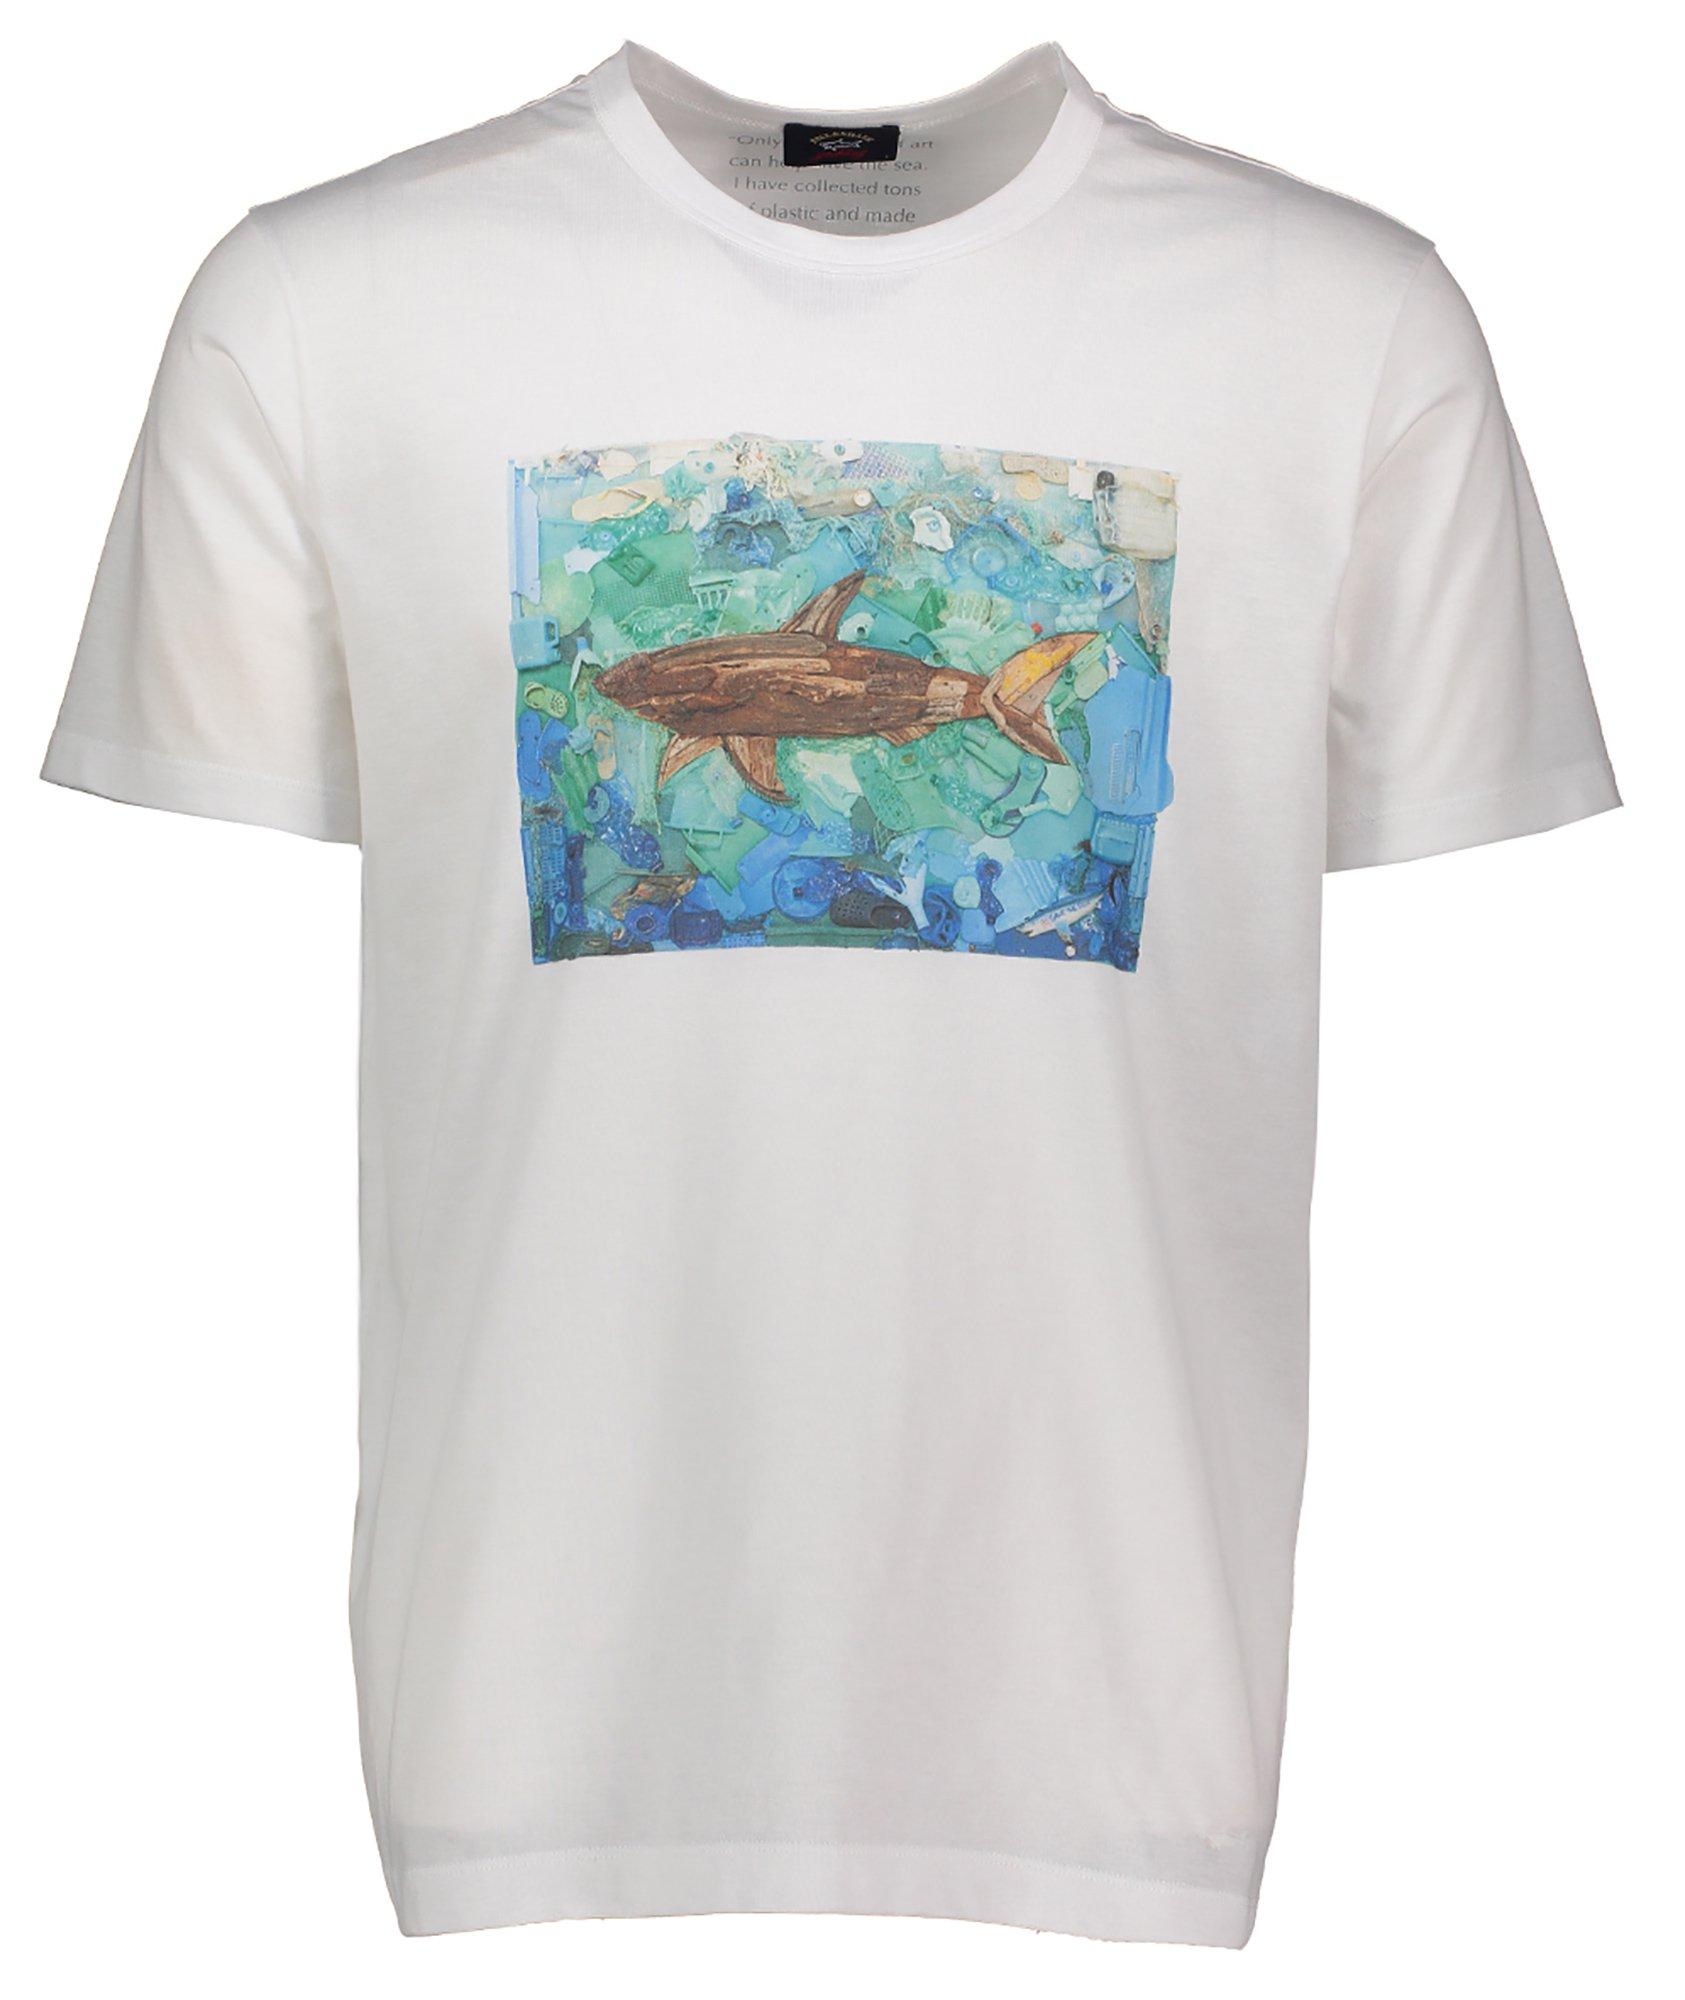 SAVE THE SEA Printed Cotton T-Shirt image 0